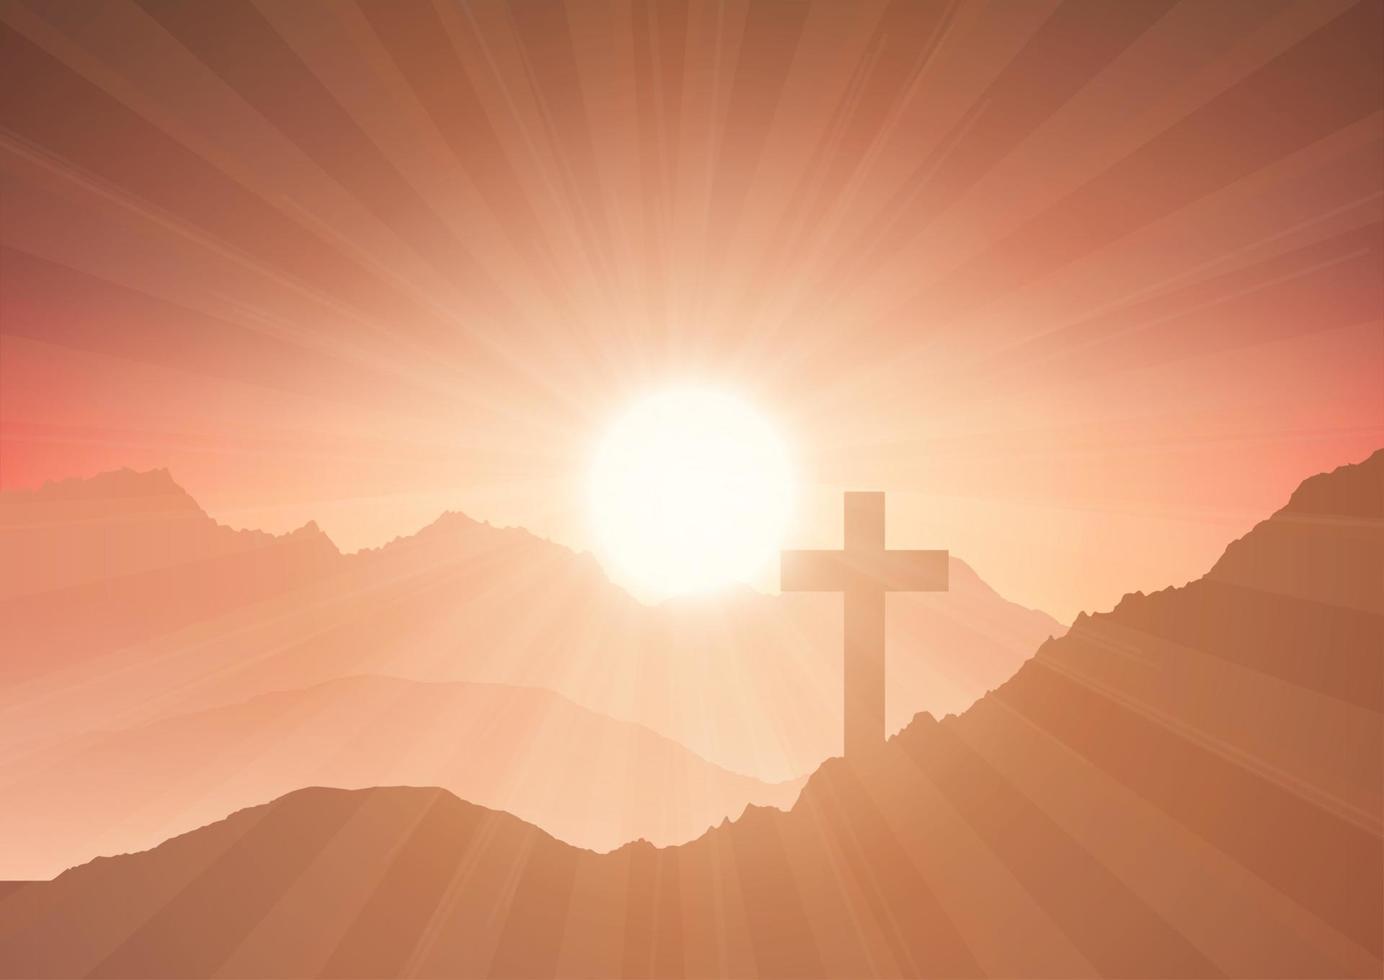 He is risen background with cross against sunburst sky vector